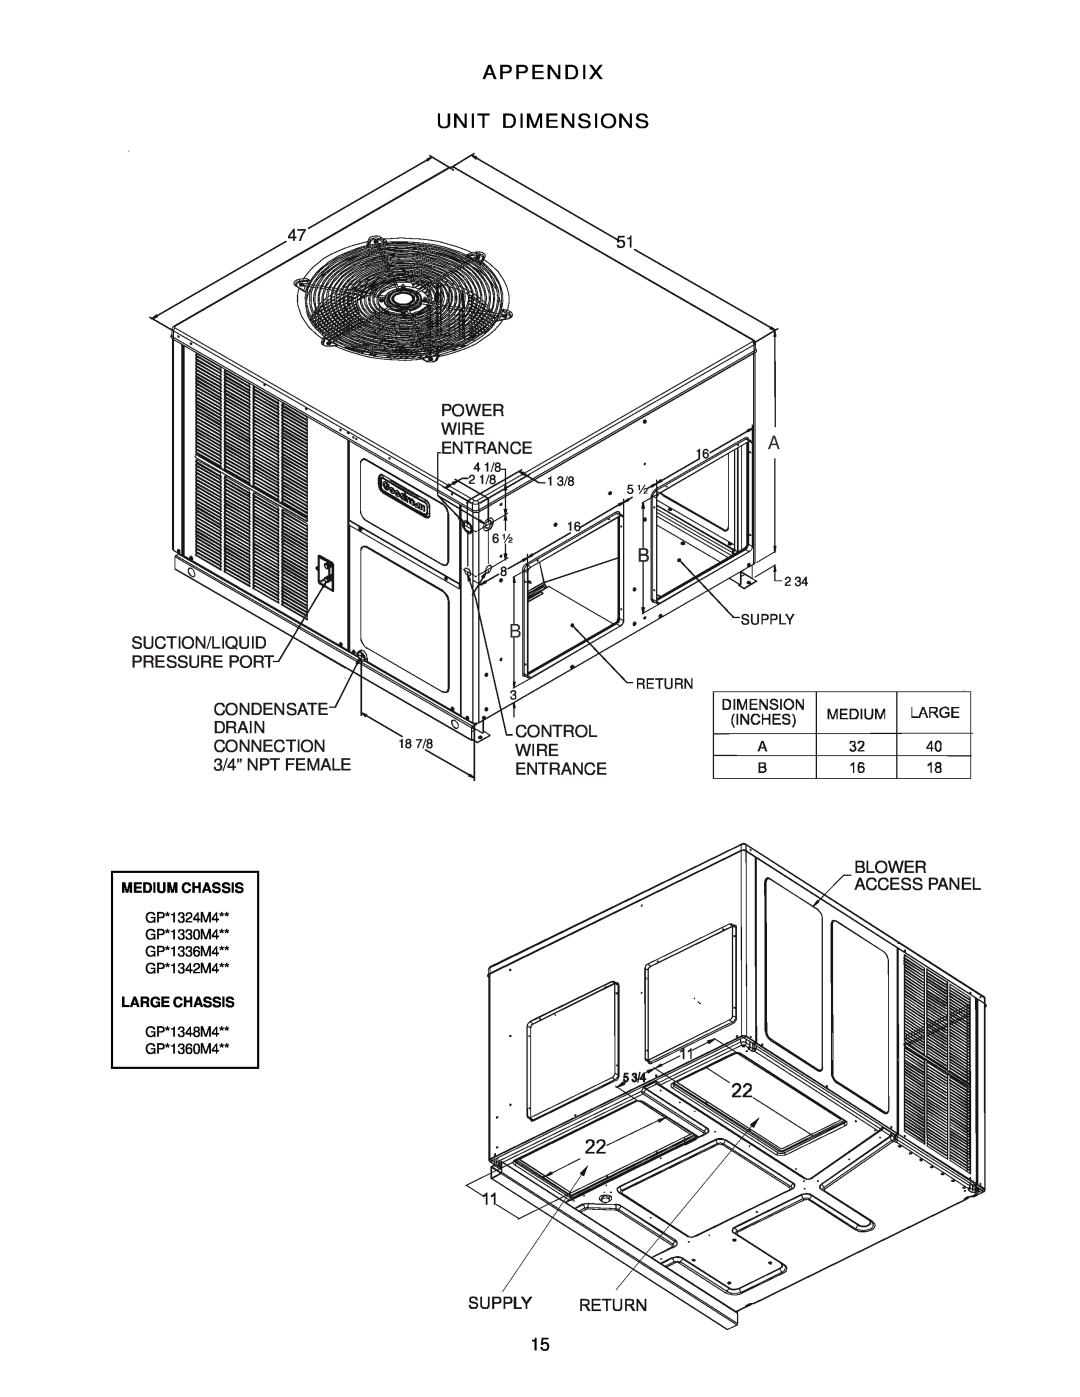 Goodman Mfg IO - 395 specifications Appendix Unit Dimensions 